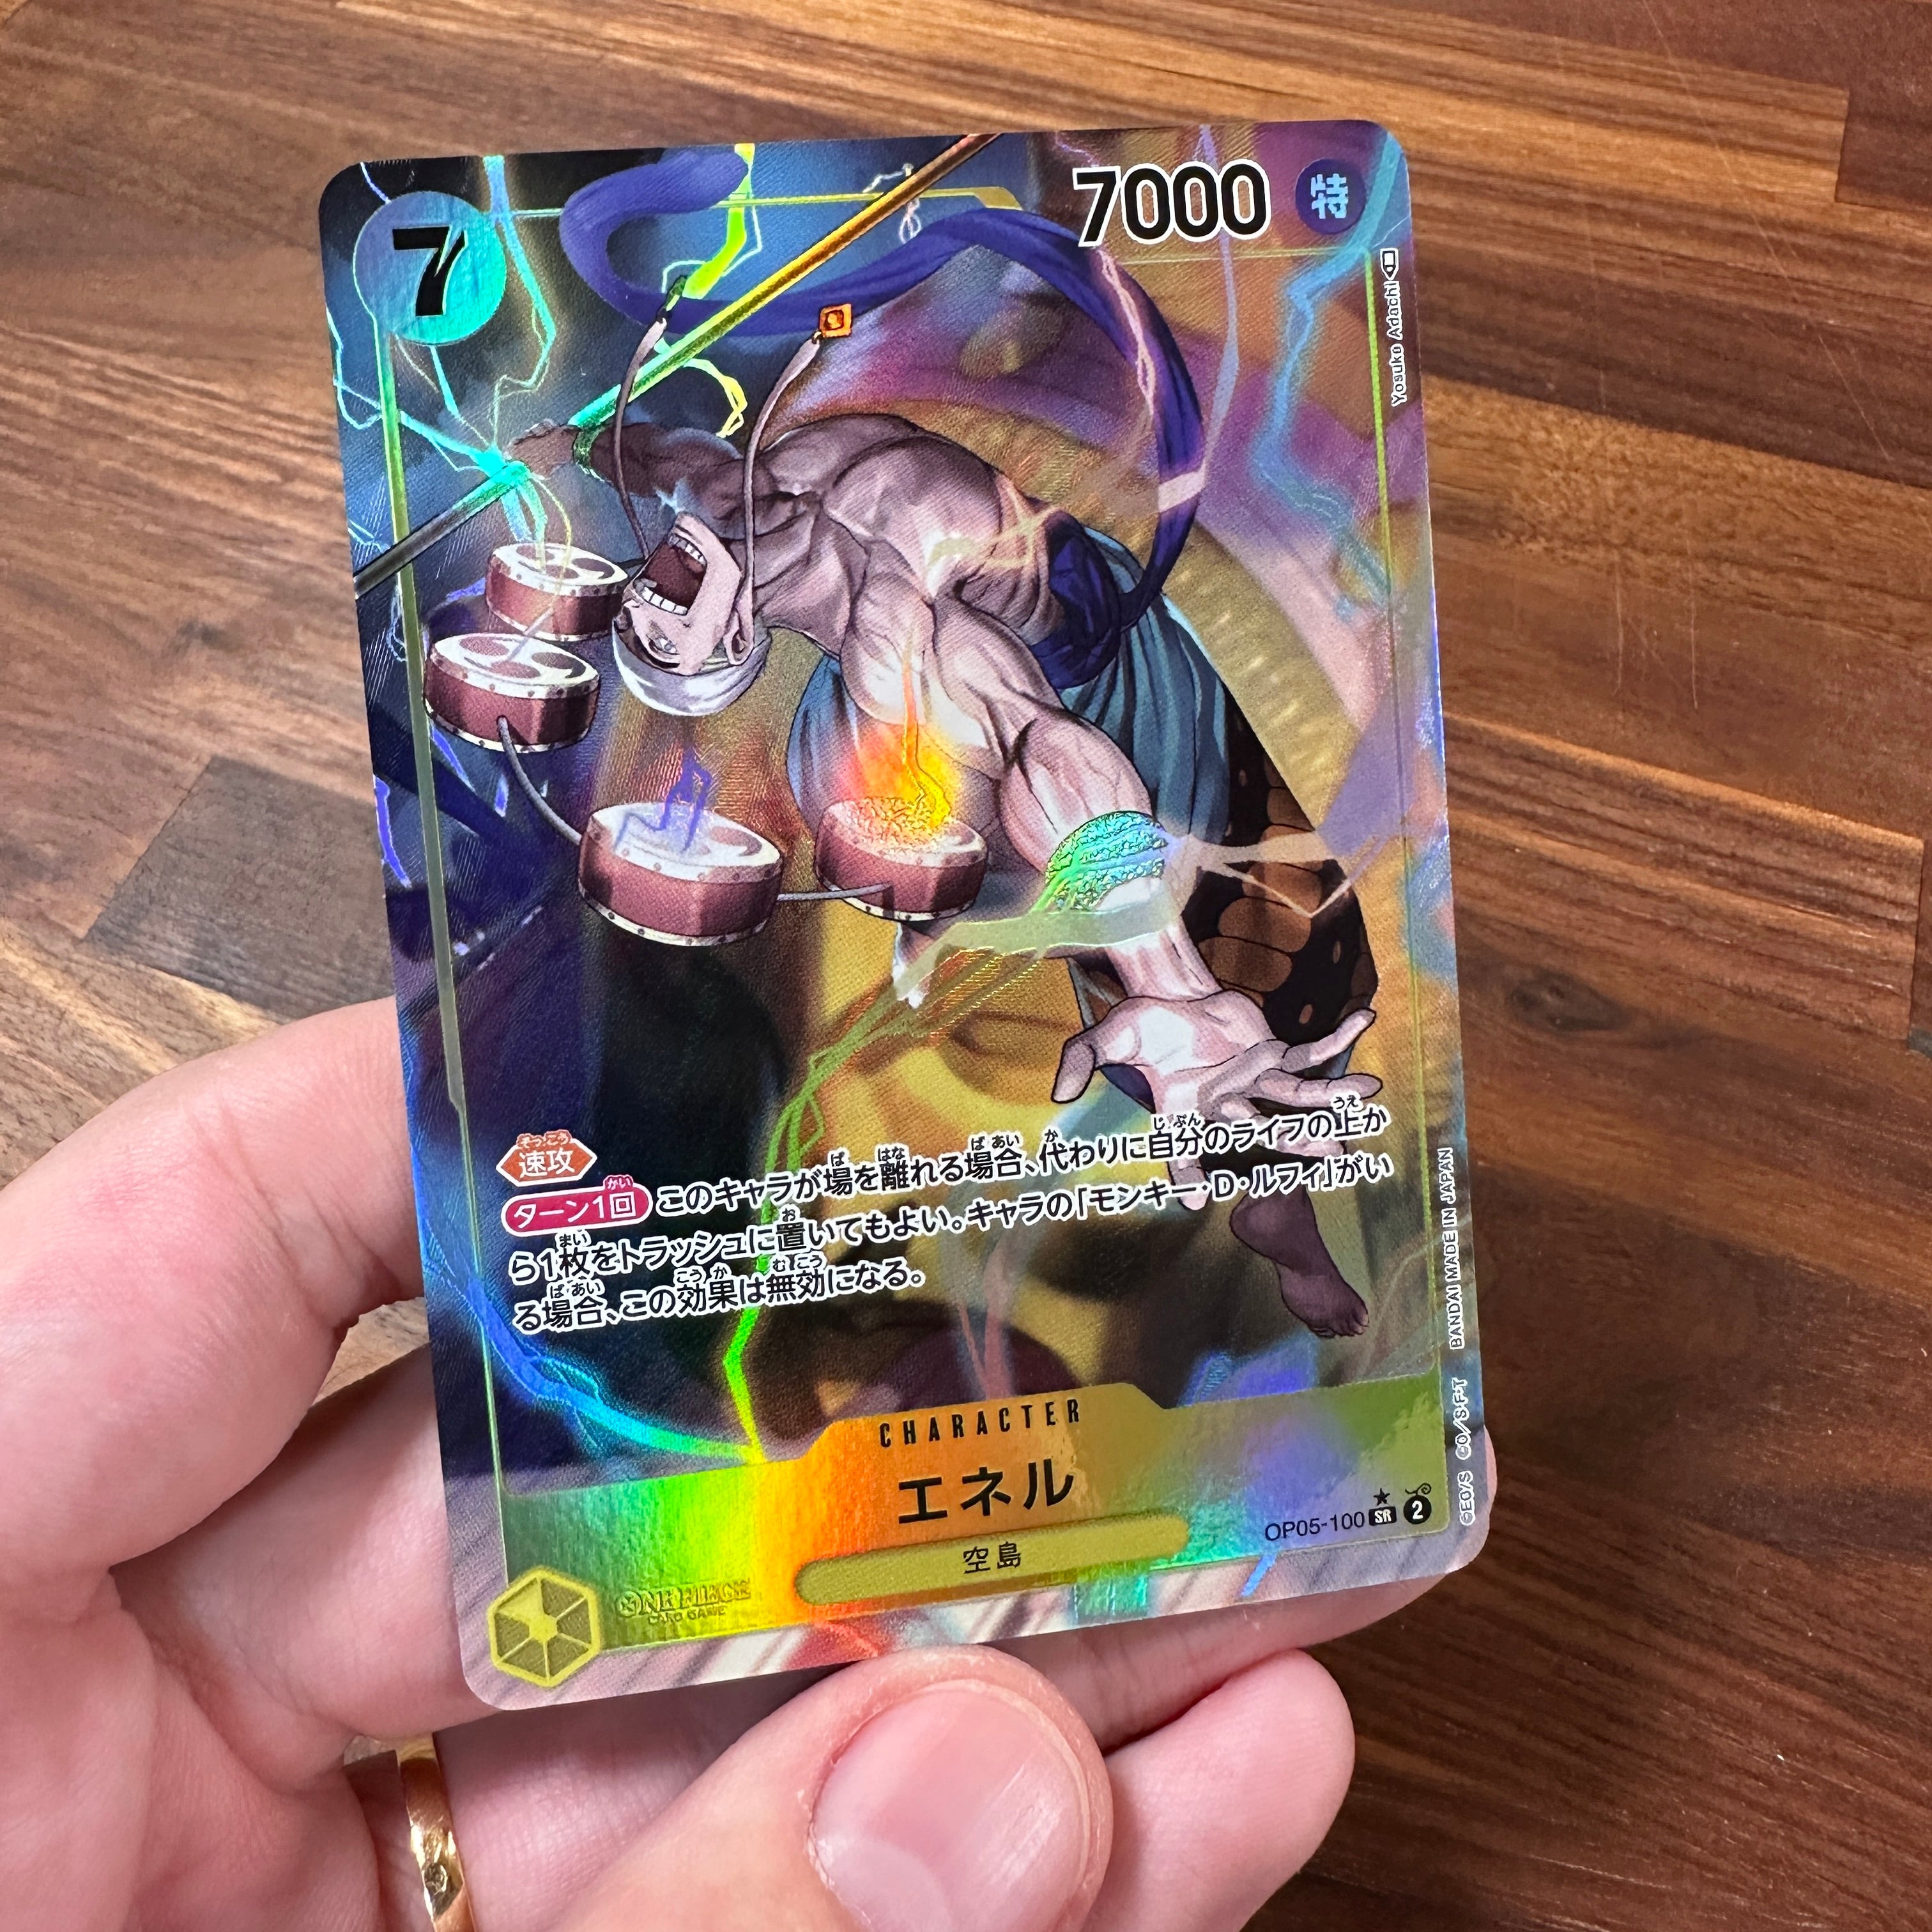 ONE PIECE CARD GAME ｢Awakening of the New Era｣  ONE PIECE CARD GAME OP05-100 Super Rare Parallel card  Enel